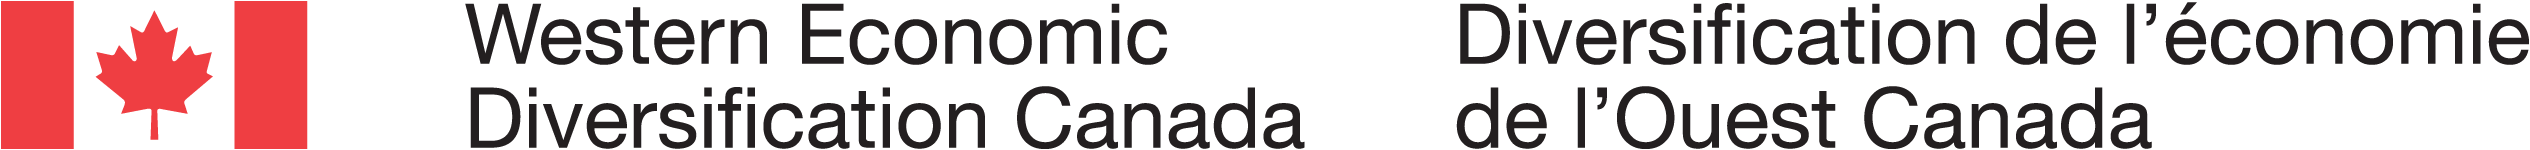 Western Economic Diversification Canada Logo